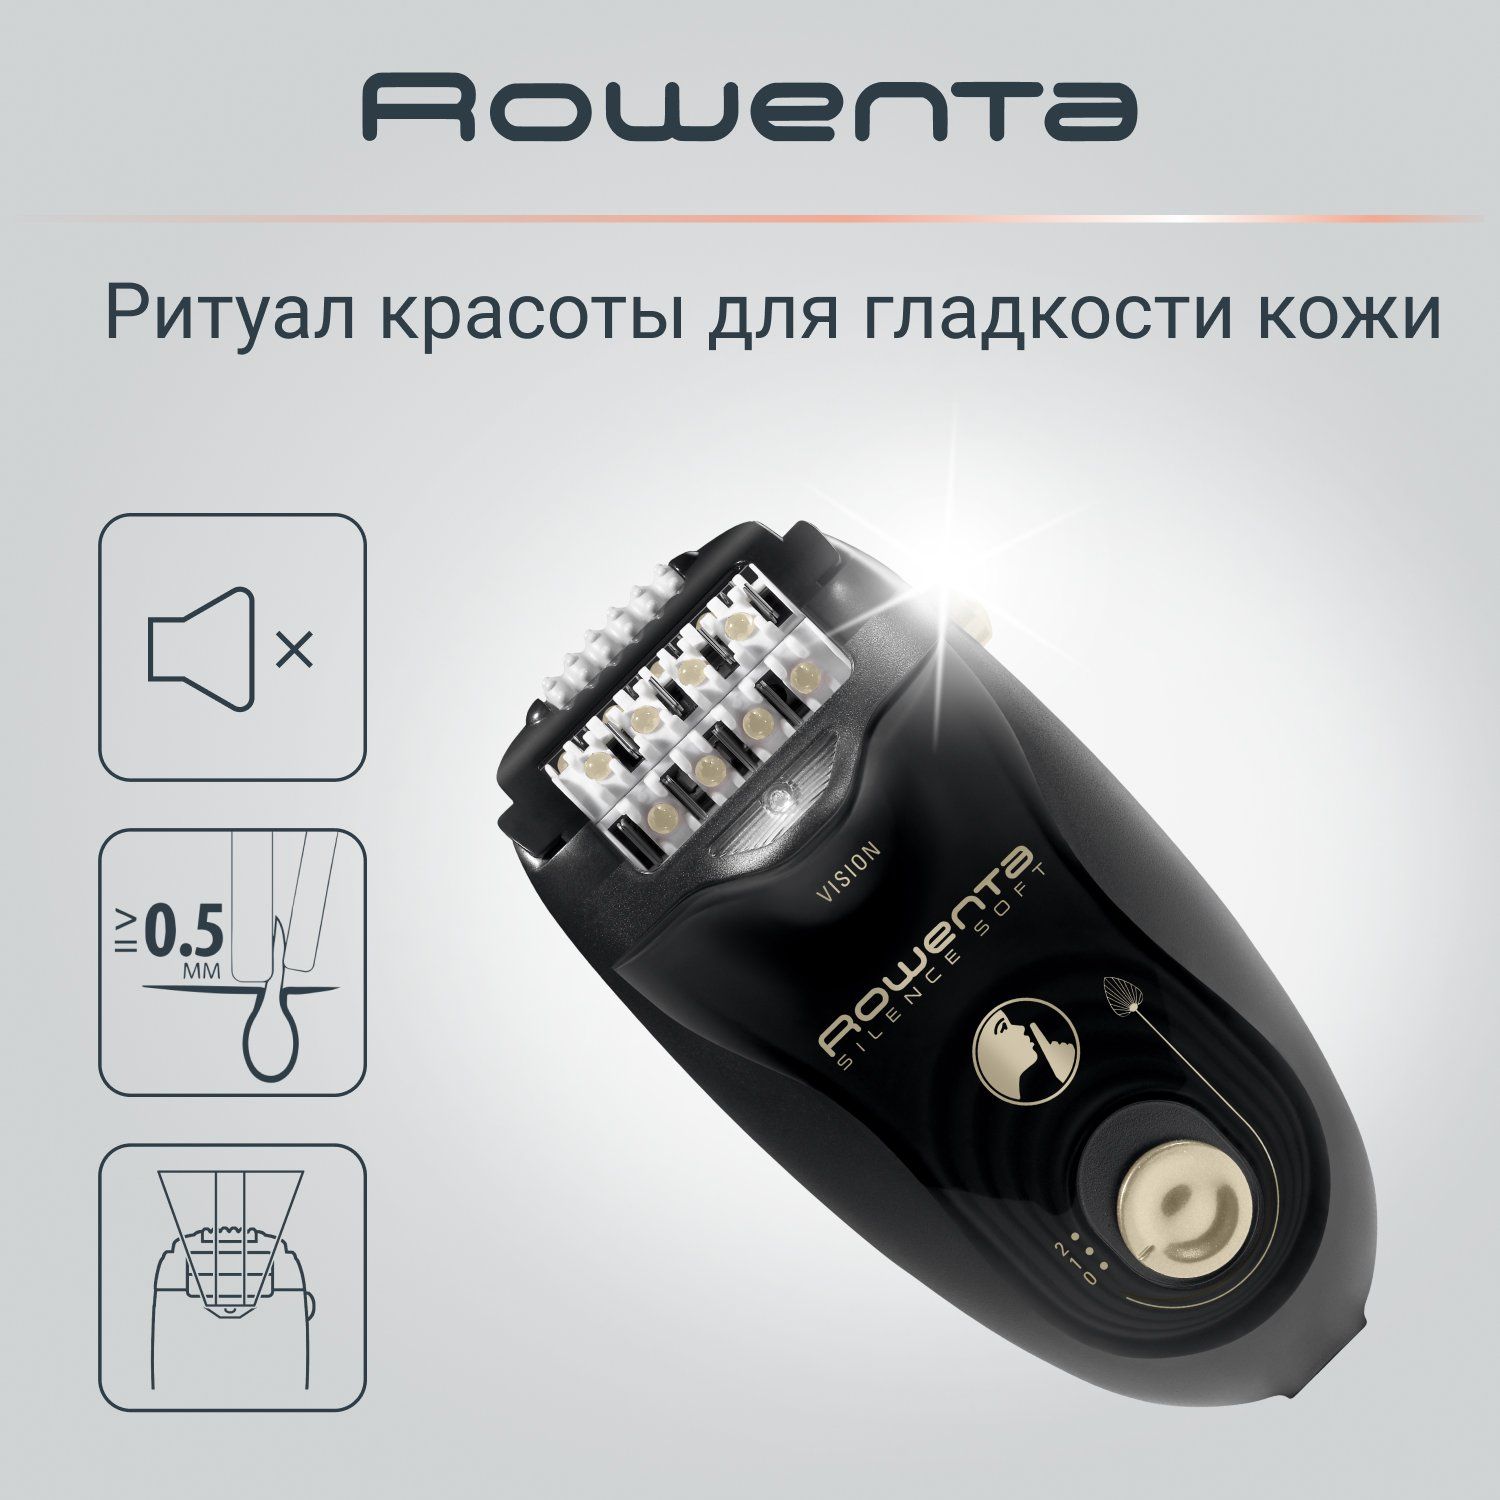 Эпилятор Rowenta Silence Soft EP5628F0, черный эпилятор rowenta ep8002f0